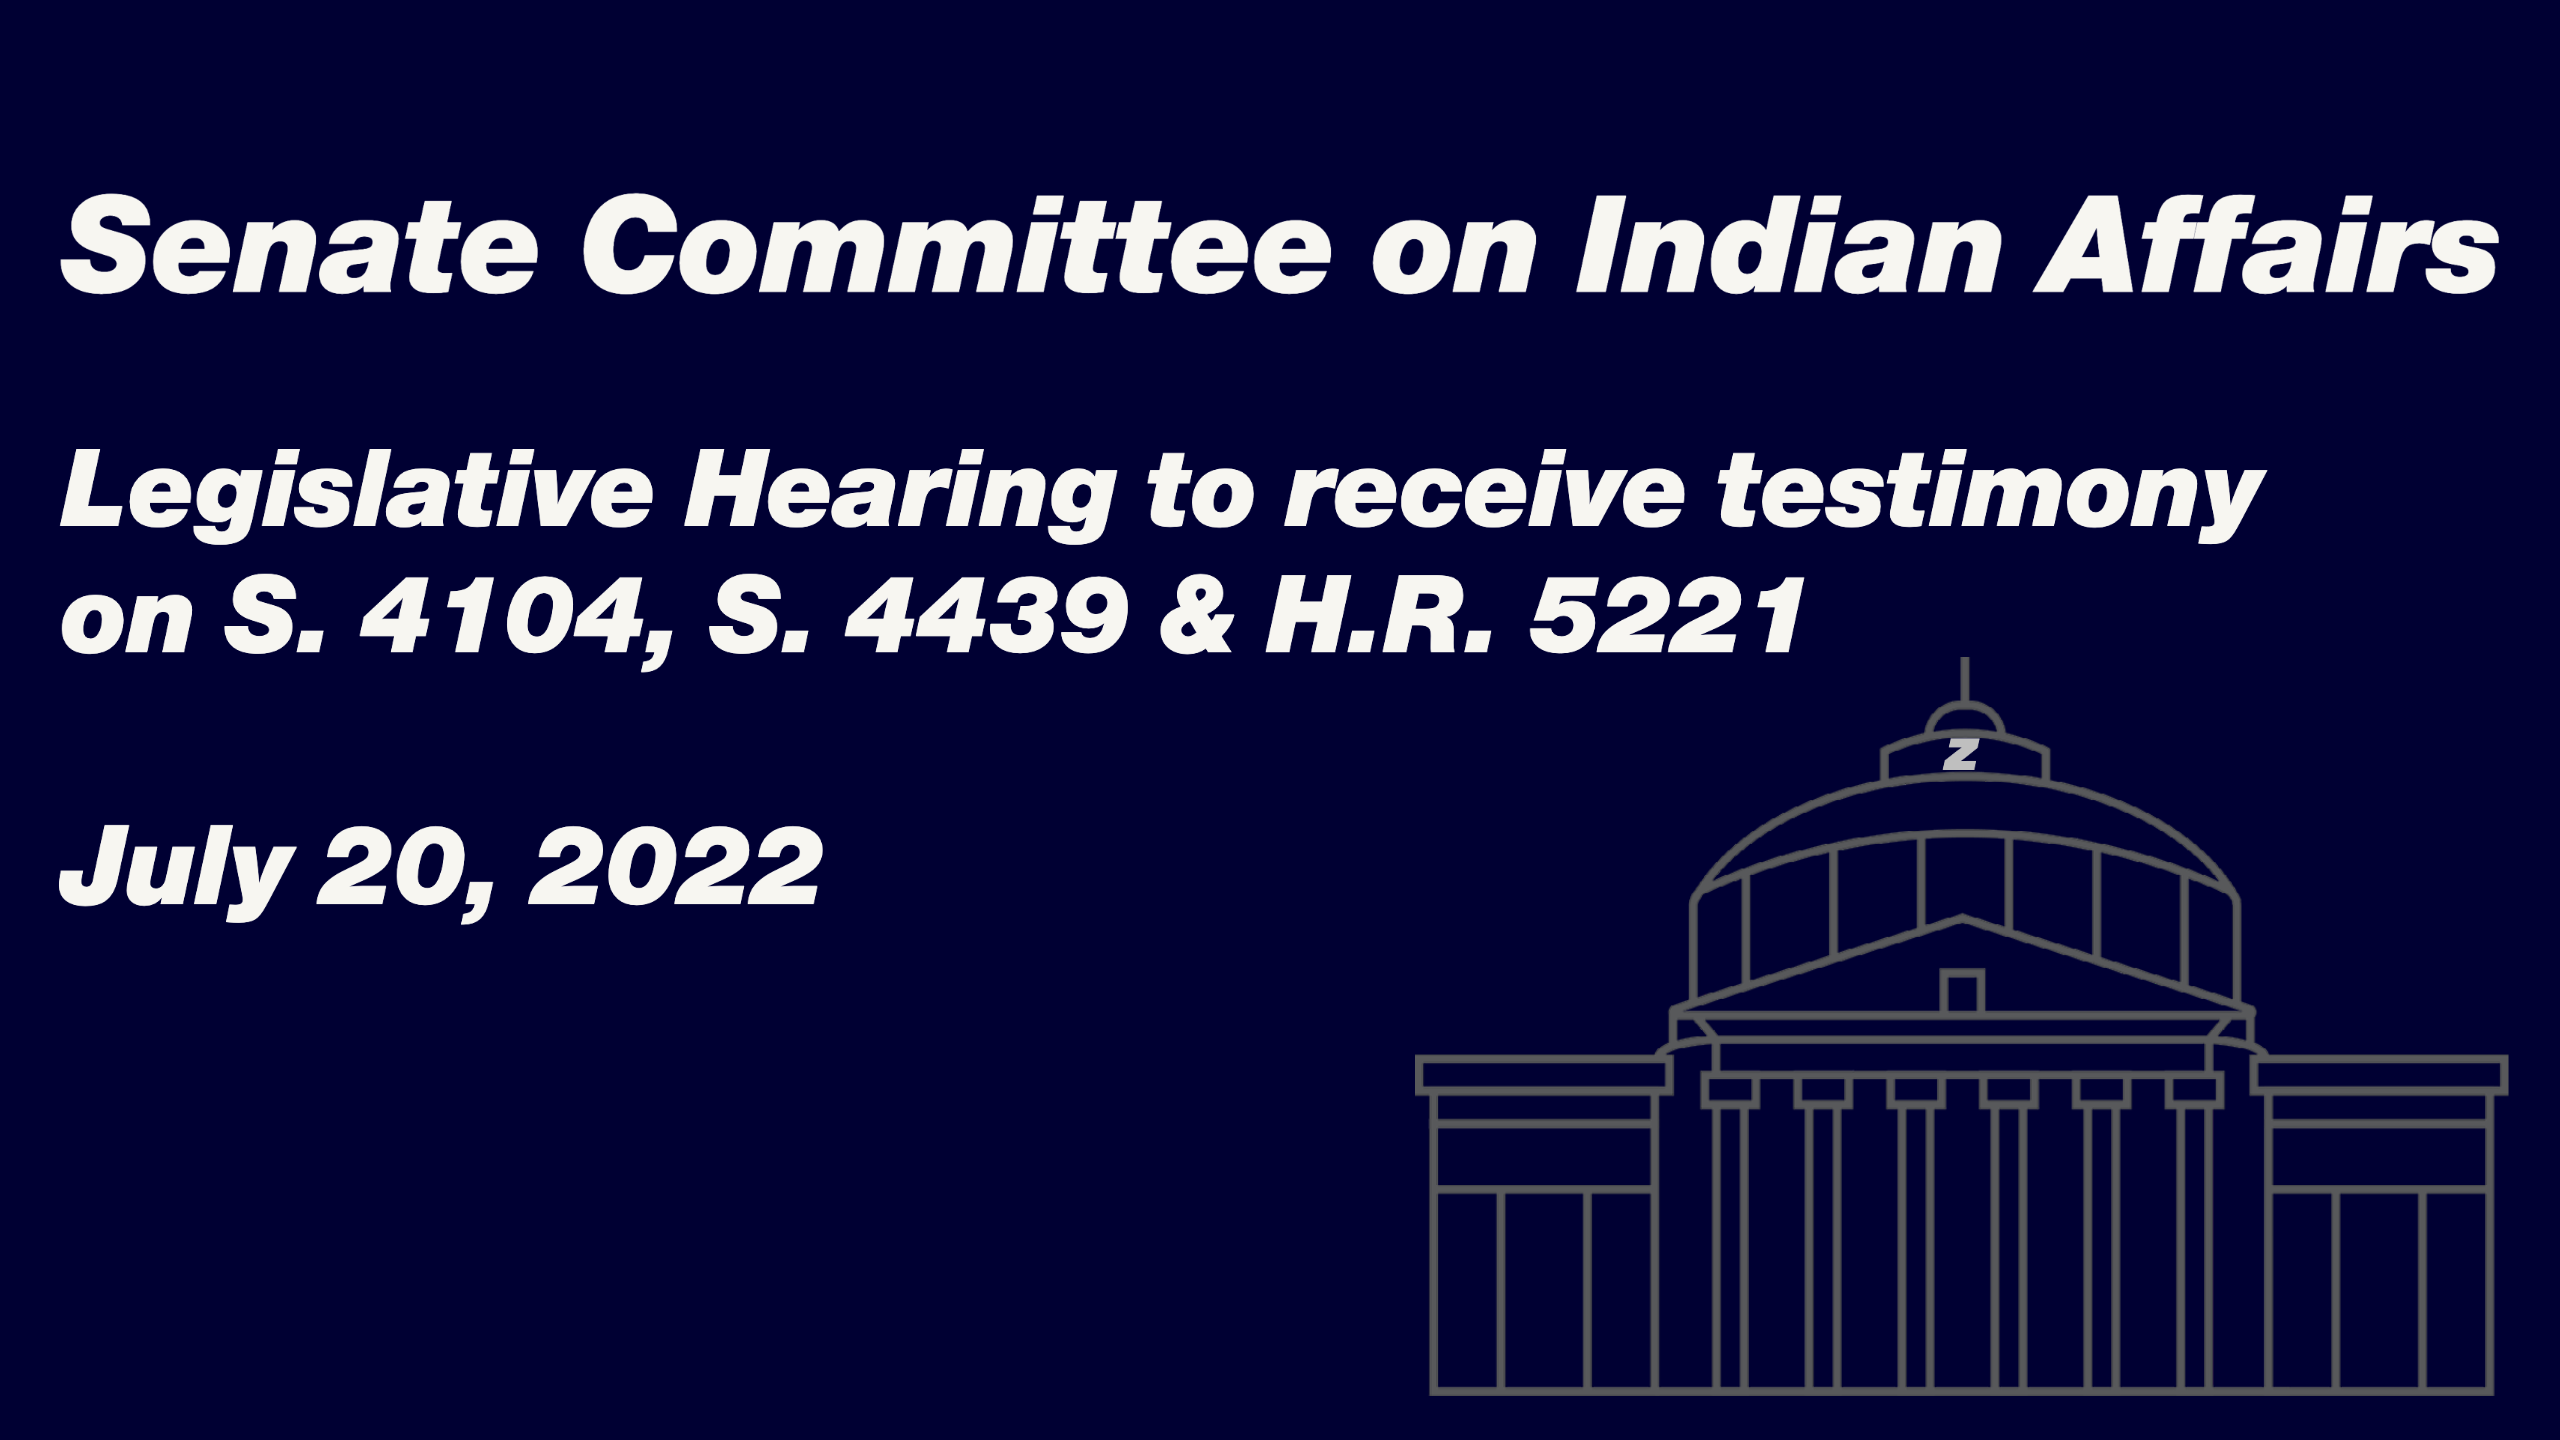 Legislative Hearing to receive testimony on S. 4104, S. 4439 & H.R. 5221